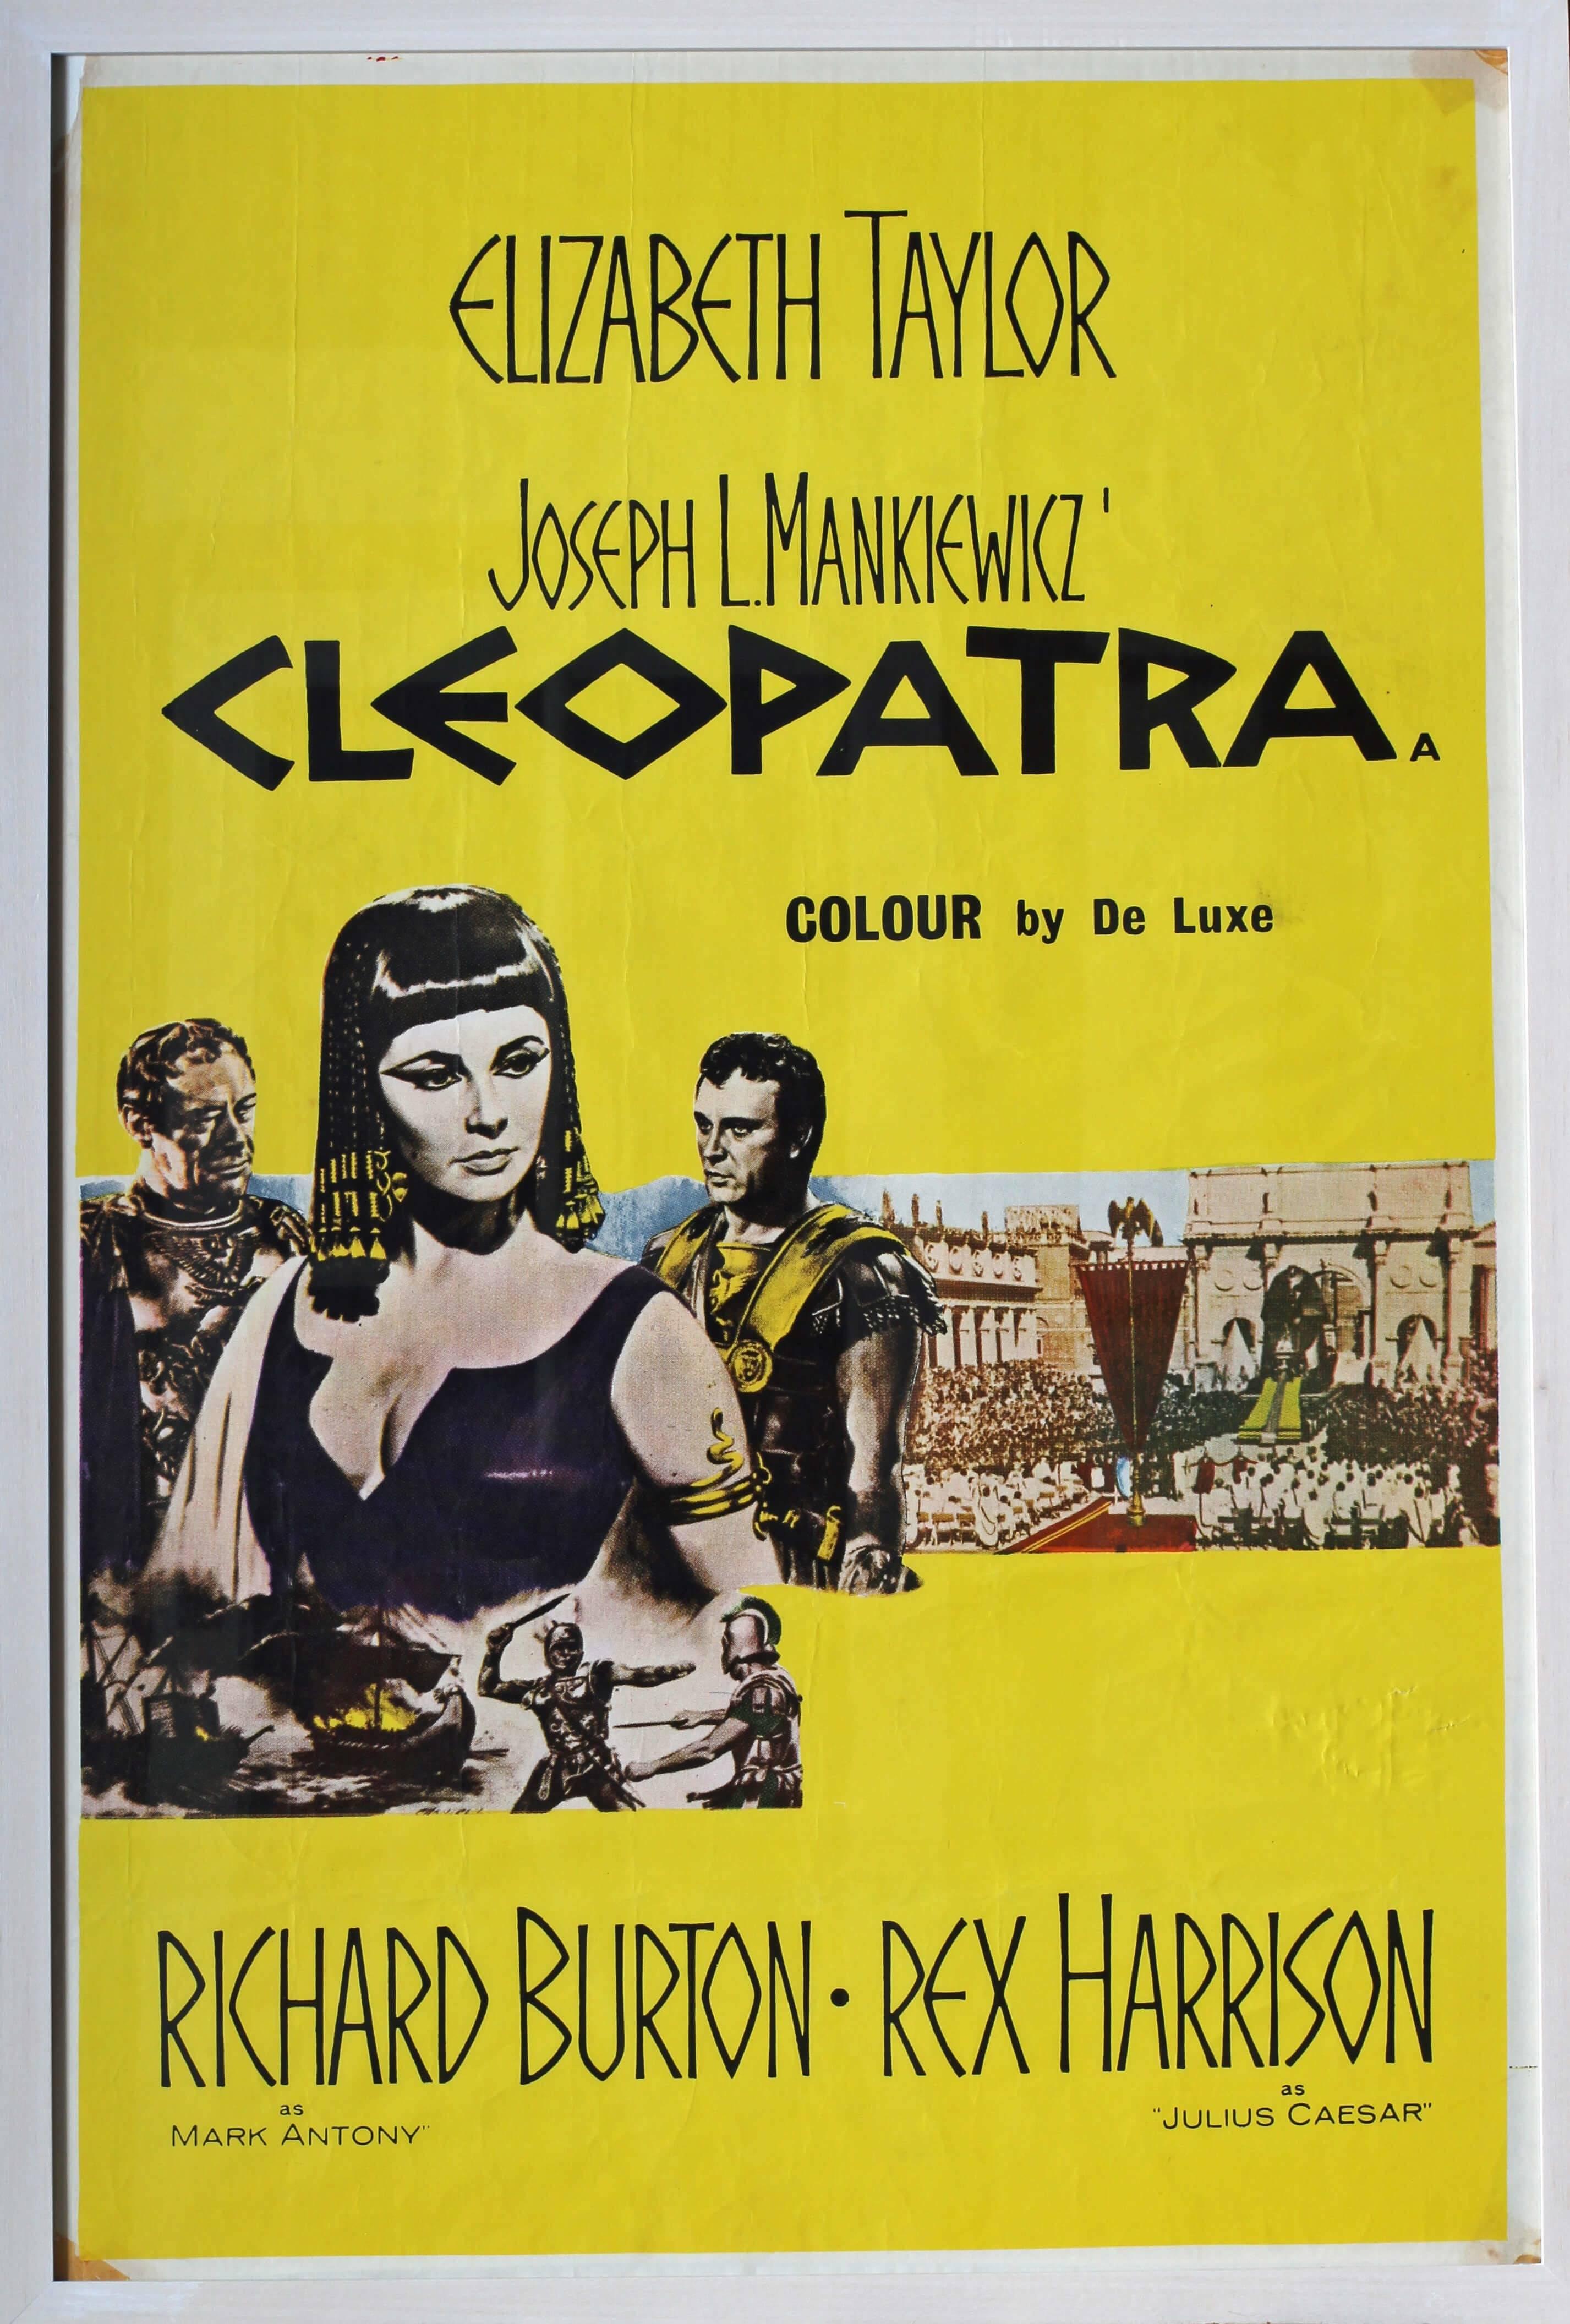 Unknown Figurative Print - Original film poster of ‘Cleopatra’ starring Elizabeth Taylor and Richard Burton